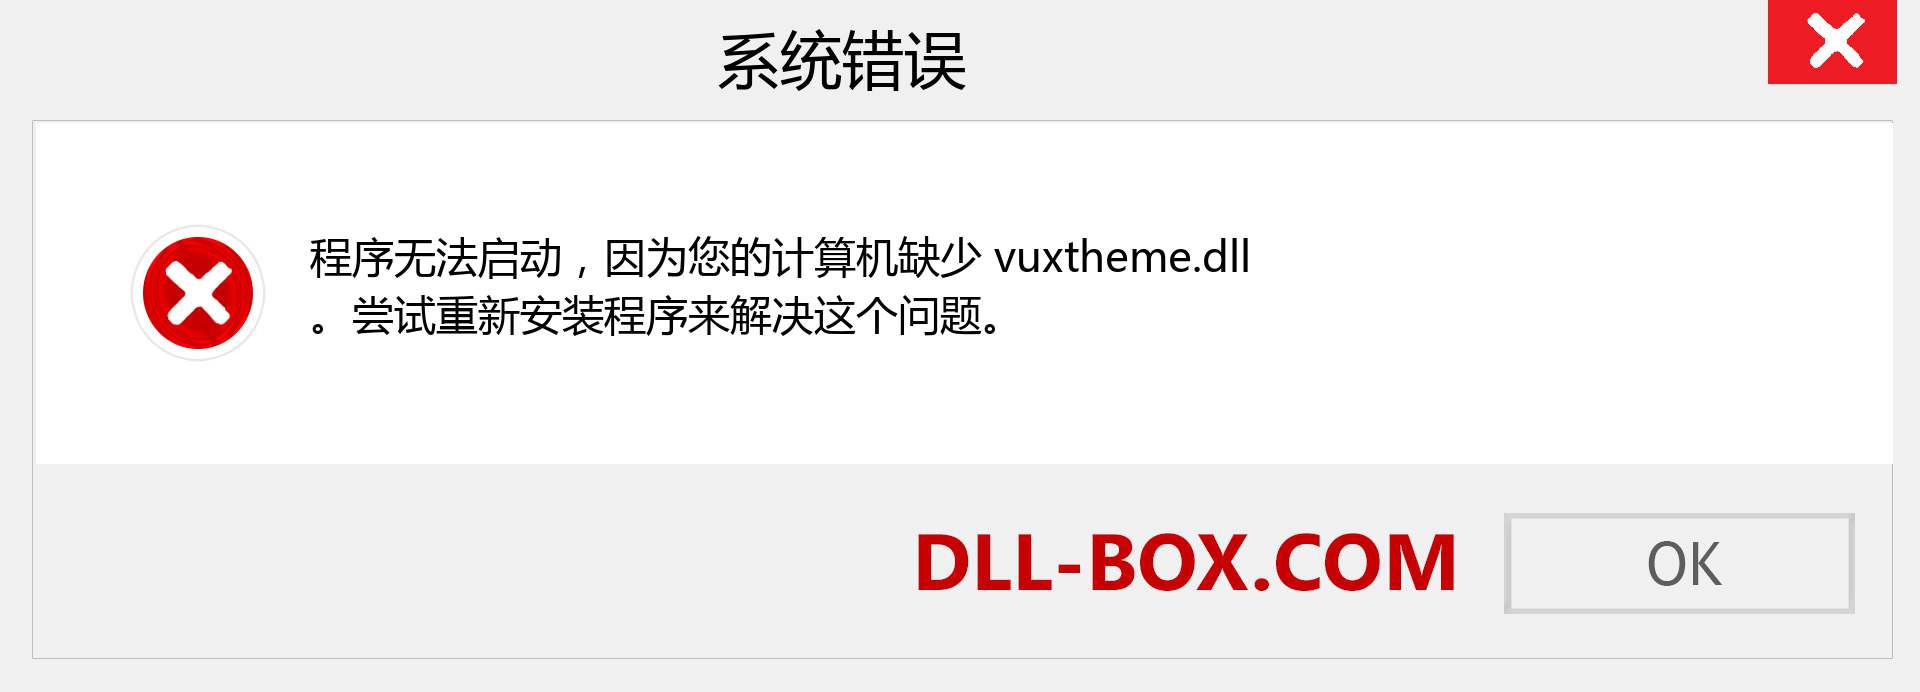 vuxtheme.dll 文件丢失？。 适用于 Windows 7、8、10 的下载 - 修复 Windows、照片、图像上的 vuxtheme dll 丢失错误